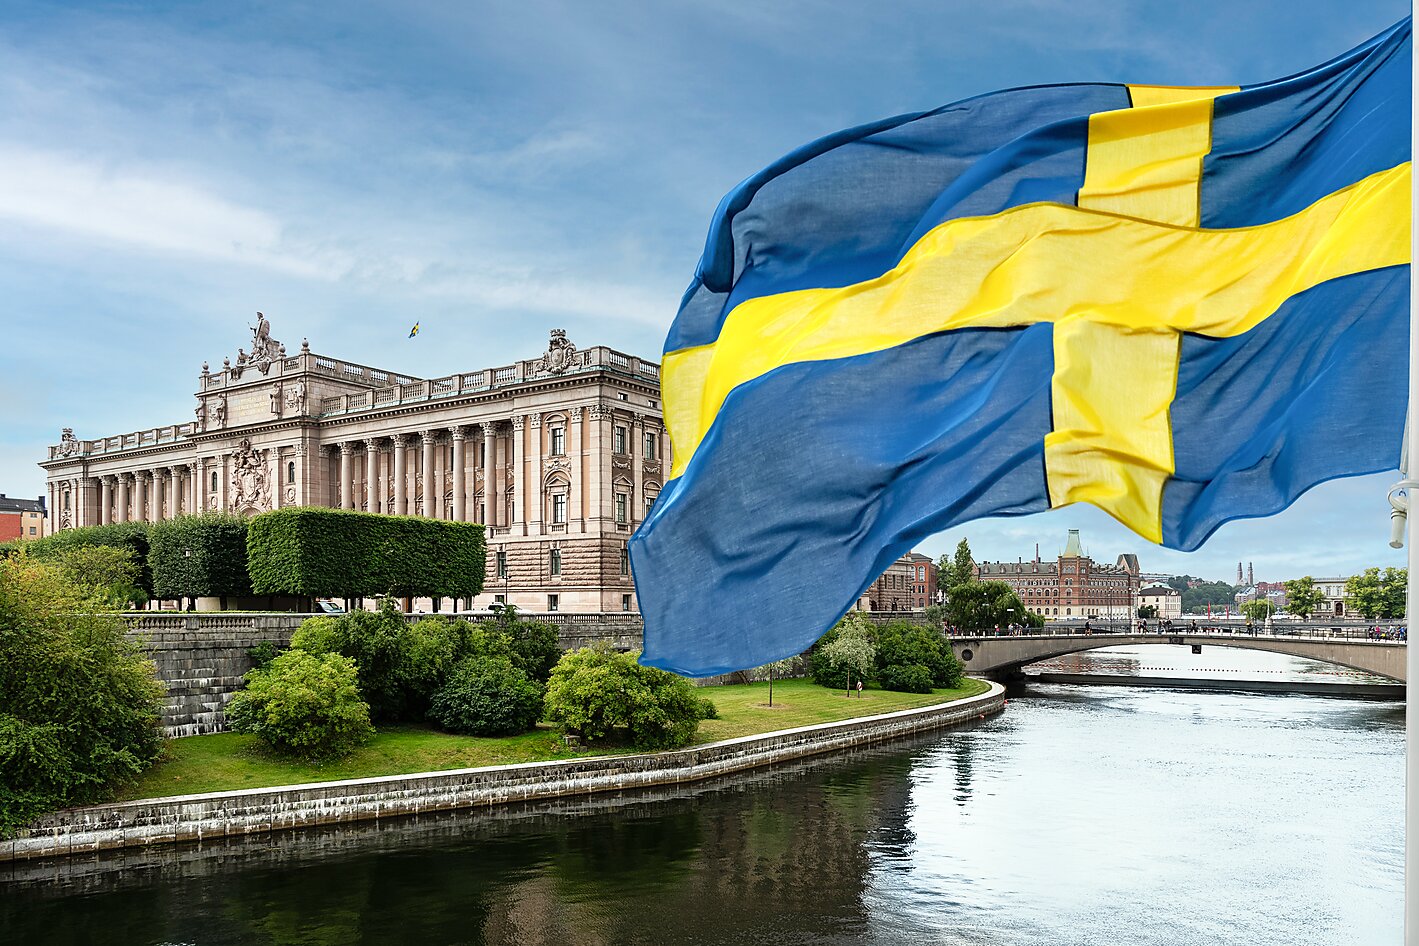 Sweden & Parliament